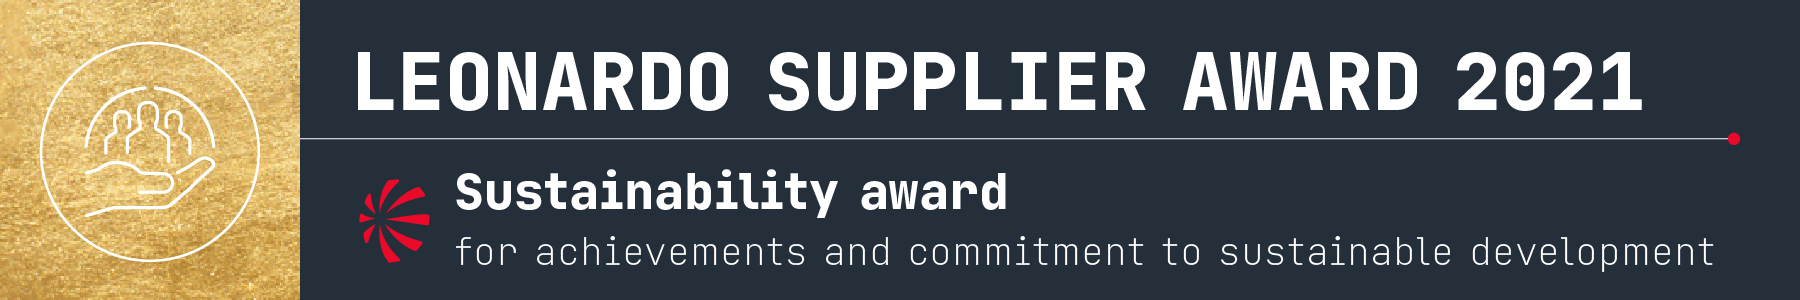 BANNER-LEONARDO-SUPPLIER-AWARD-2021_Sustainability-award